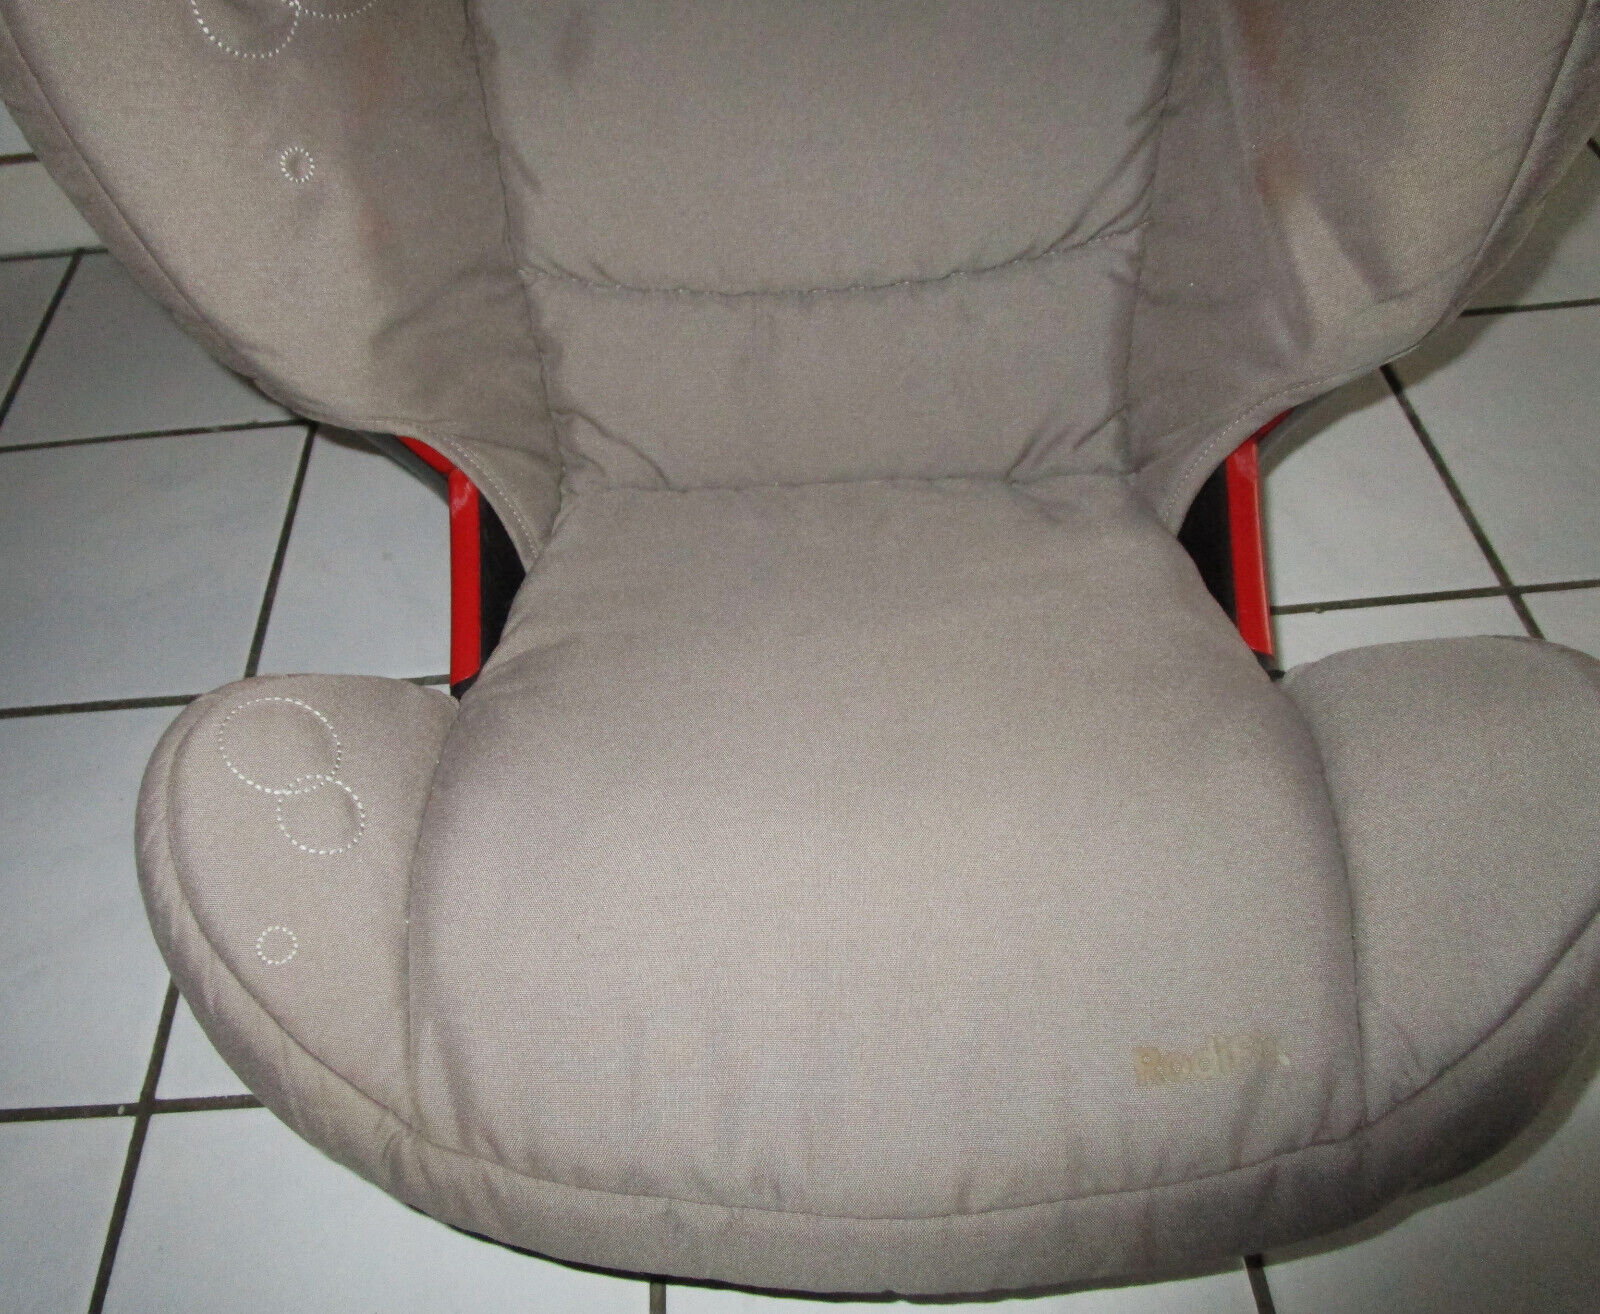 MAXI COSI Maxi Cosi Air Protect, Kindersitz 15-36 kg, neuwertig